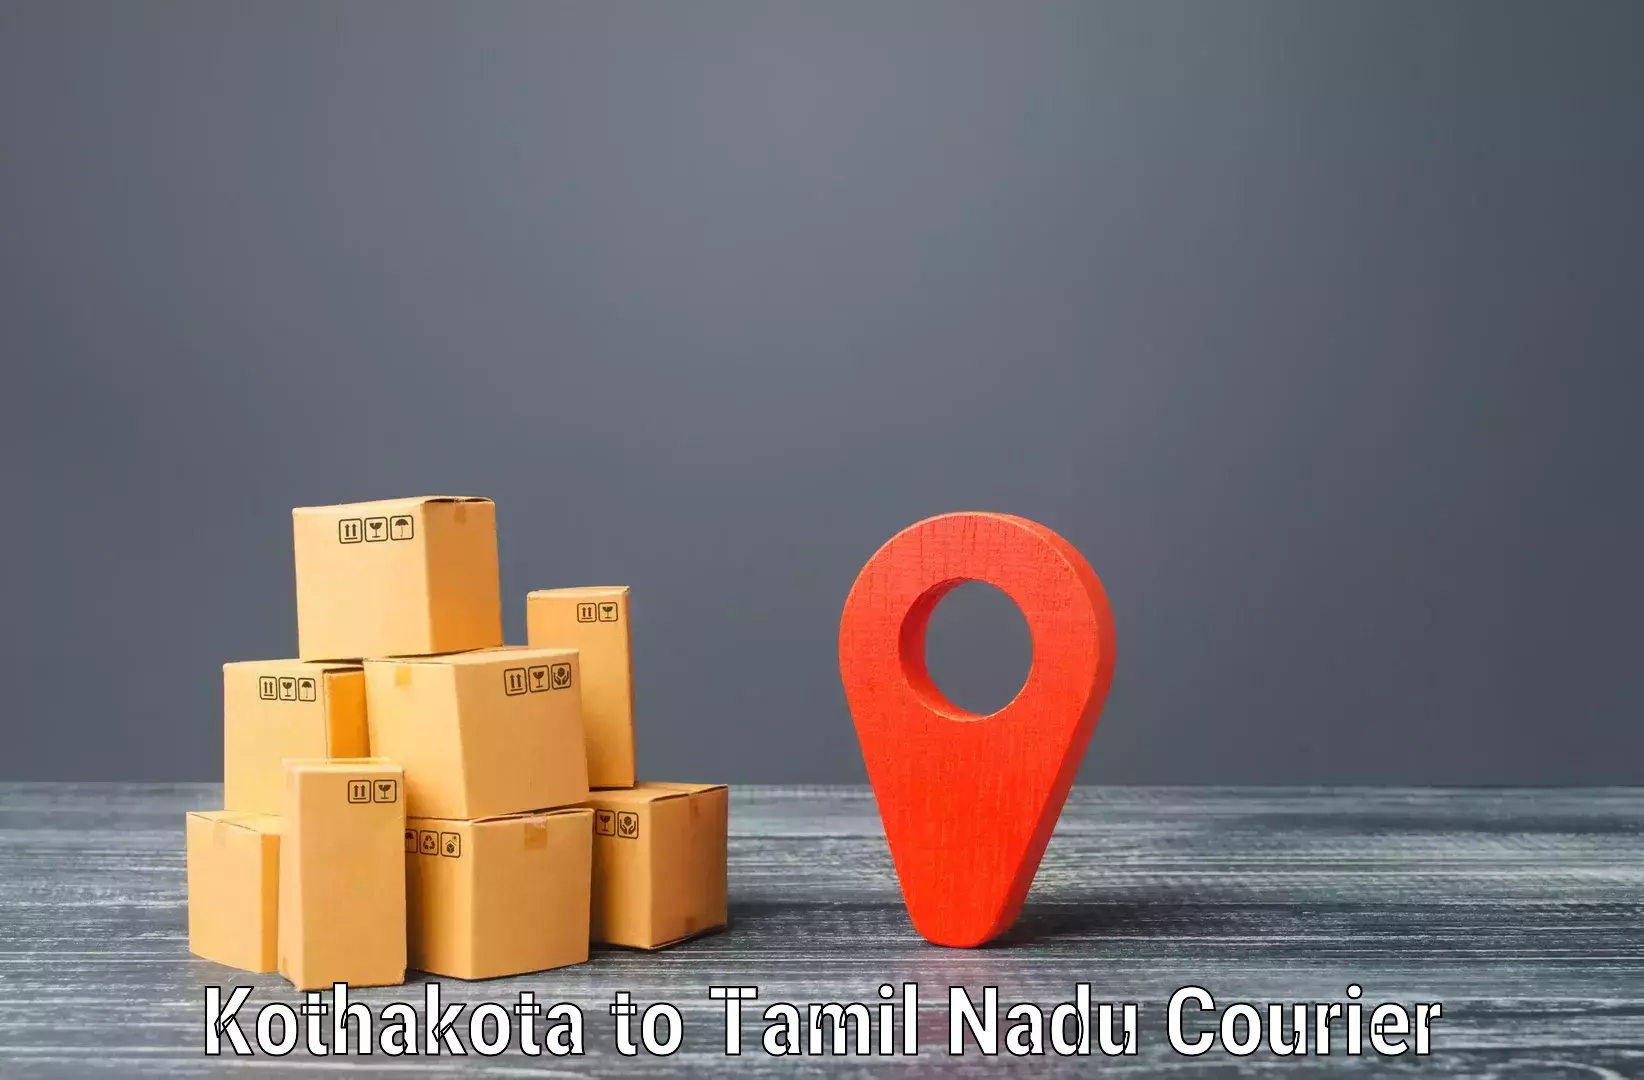 Business shipping needs Kothakota to Chengalpattu